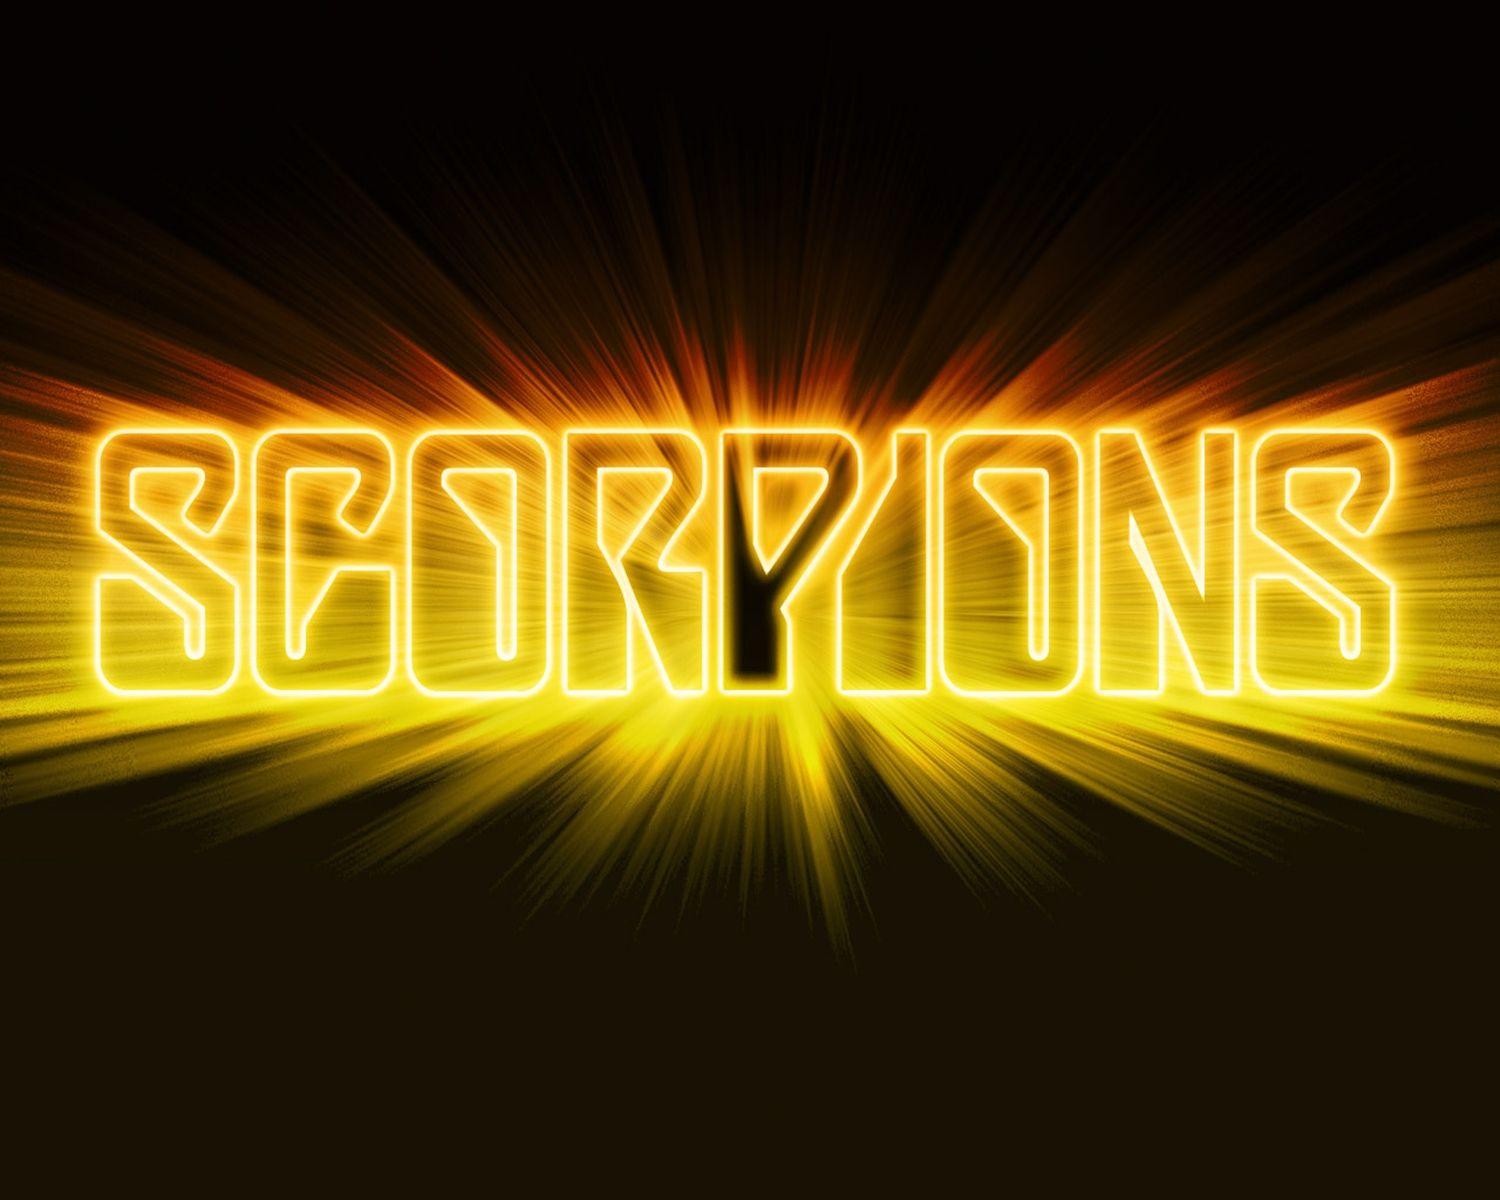 Scorpion Logo Wallpaper